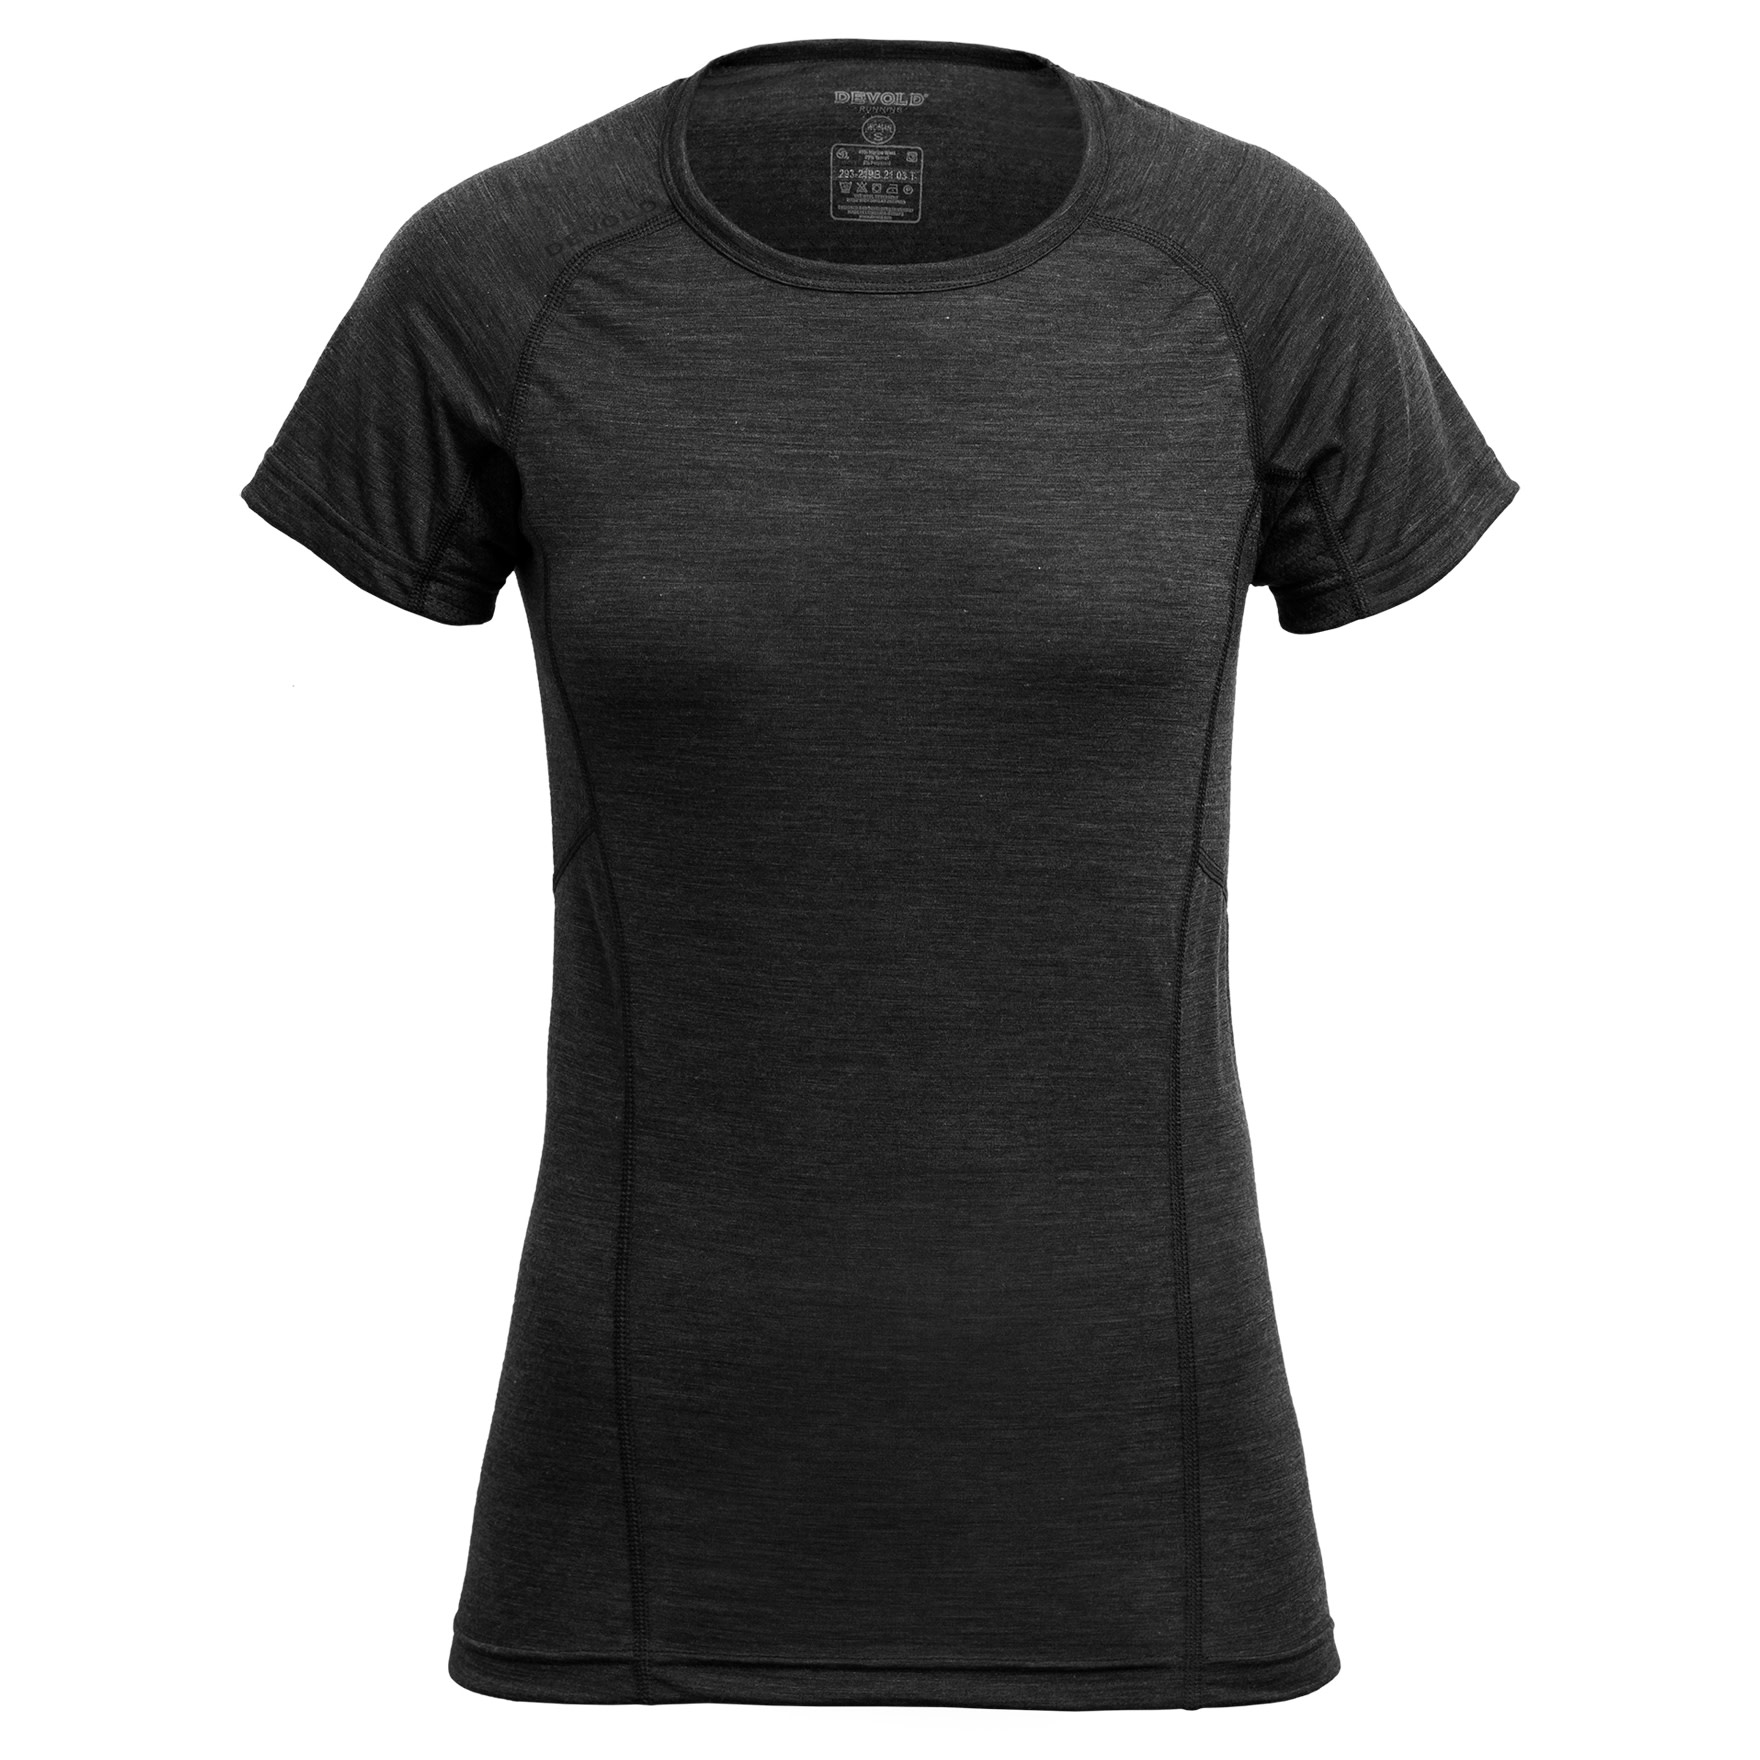 Devold Running Woman T-shirt Anthracite